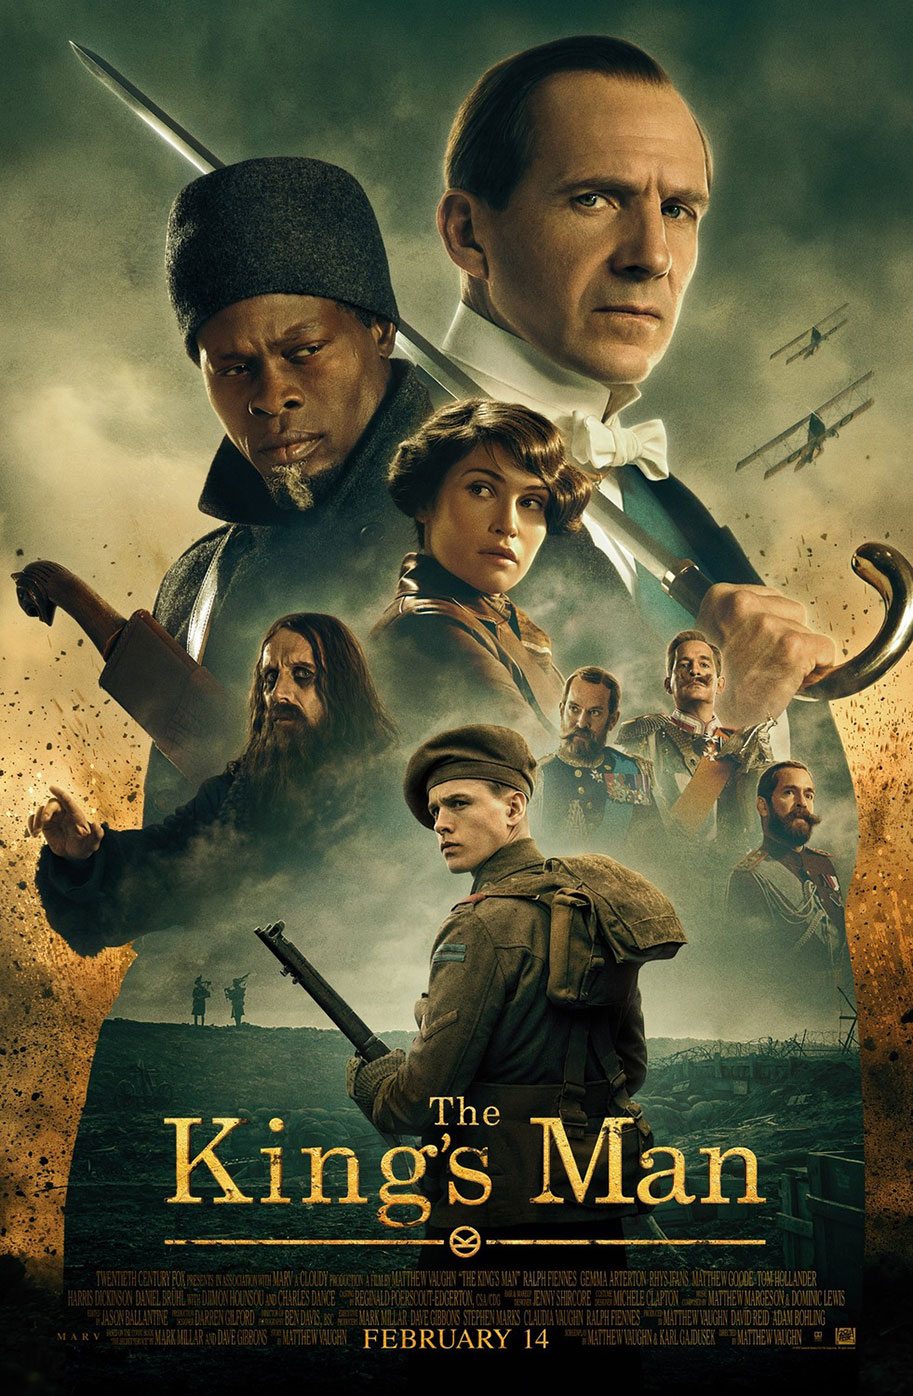 The King's Man, trailer, Matthew Vaughn, 2021, prequel